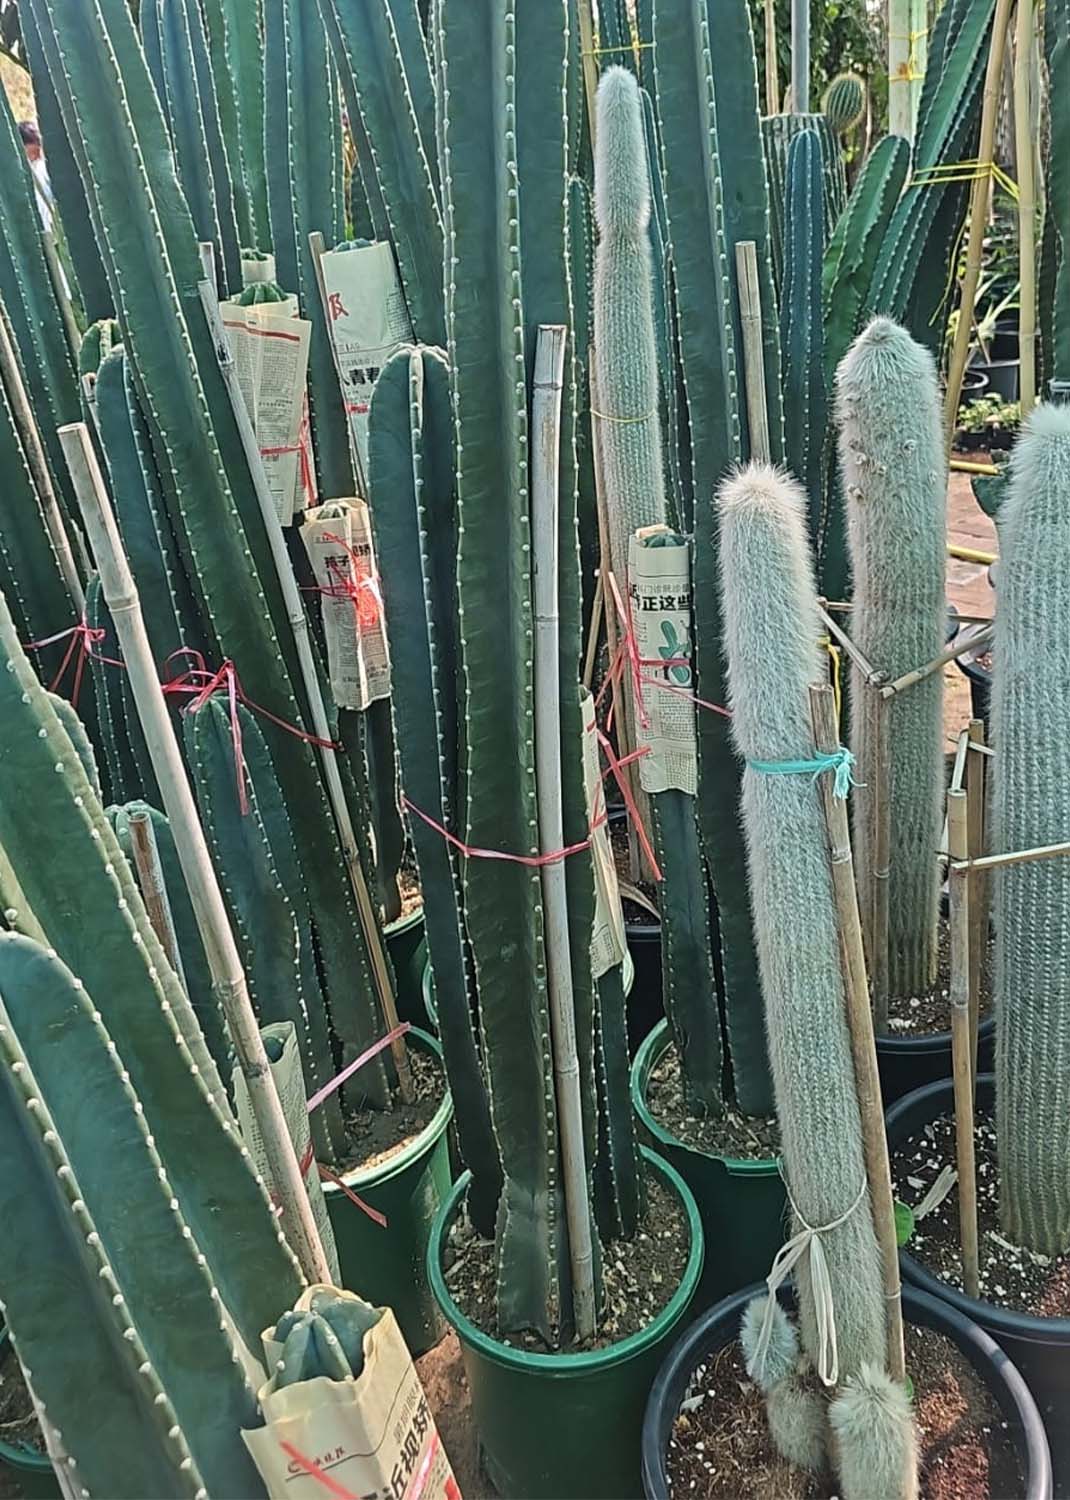 Cactus outdoor